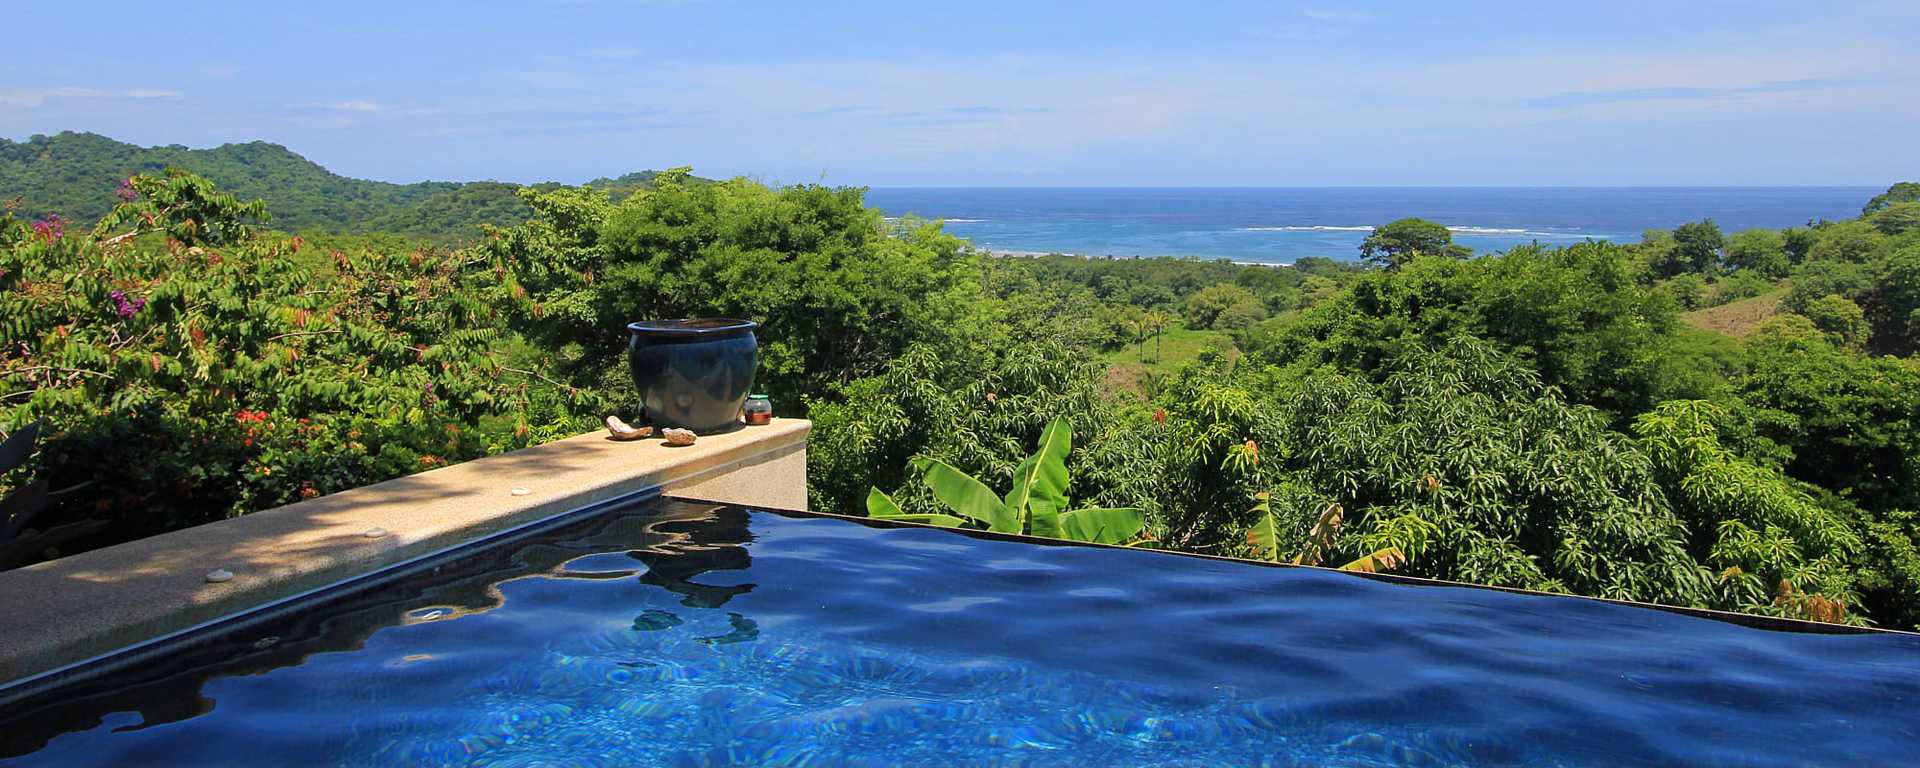 Infinity pool at luxury resort in Costa Rica